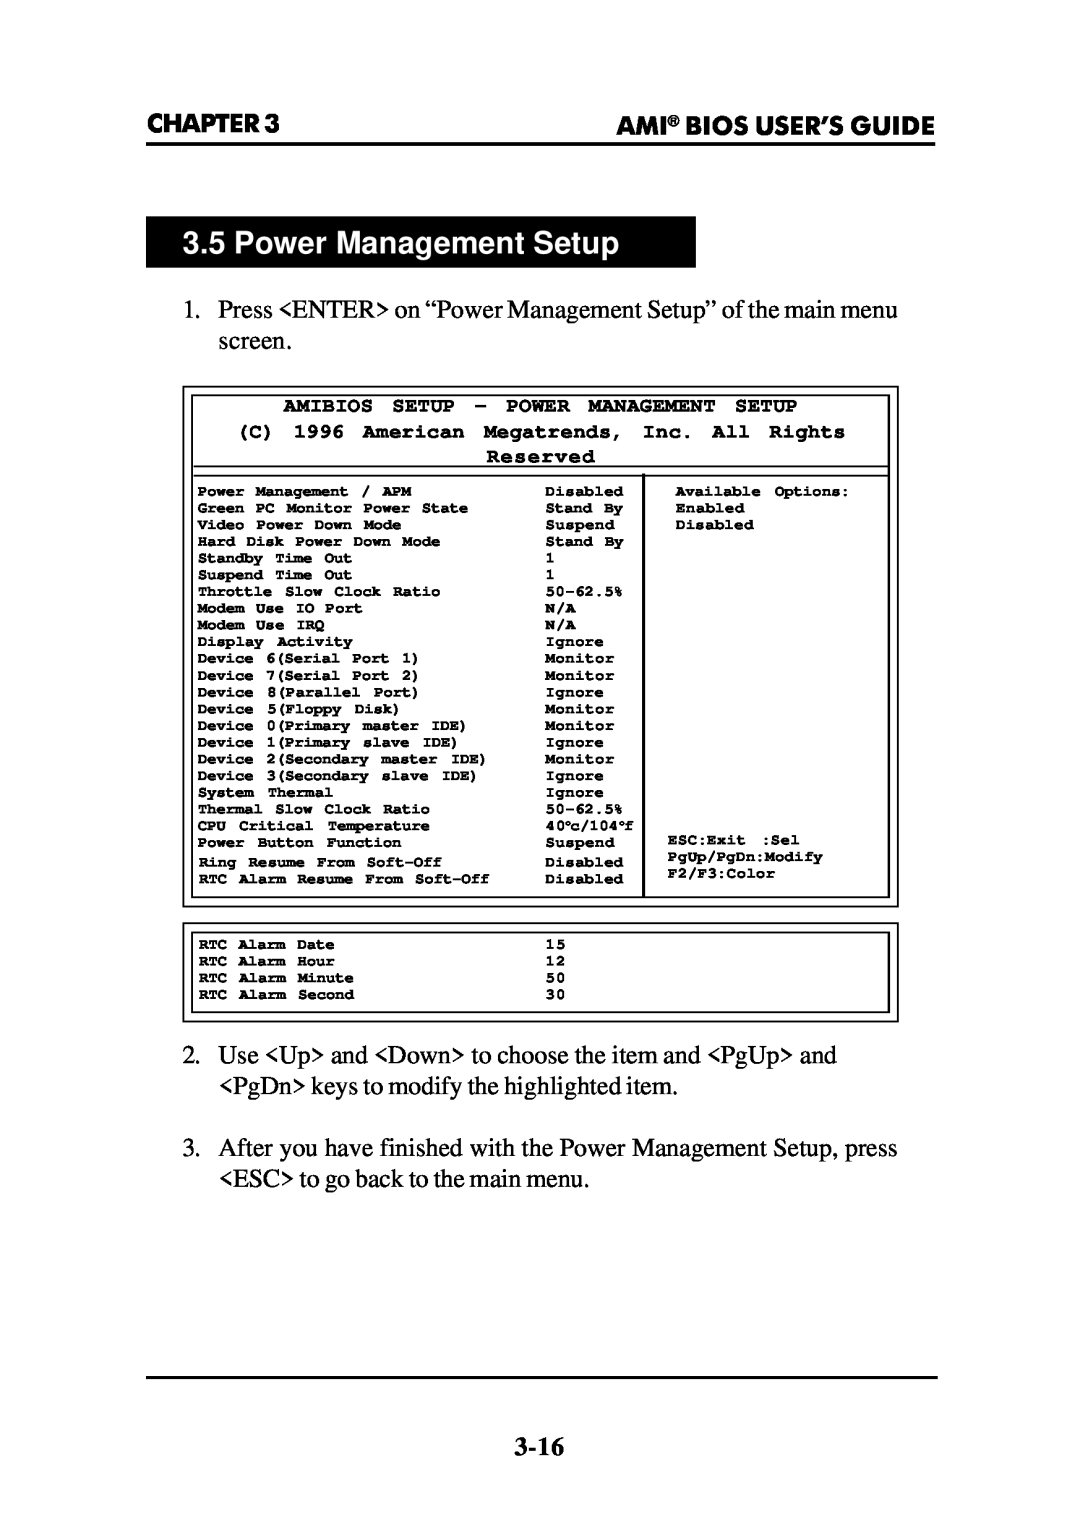 Intel MS-6112 manual Power Management Setup 